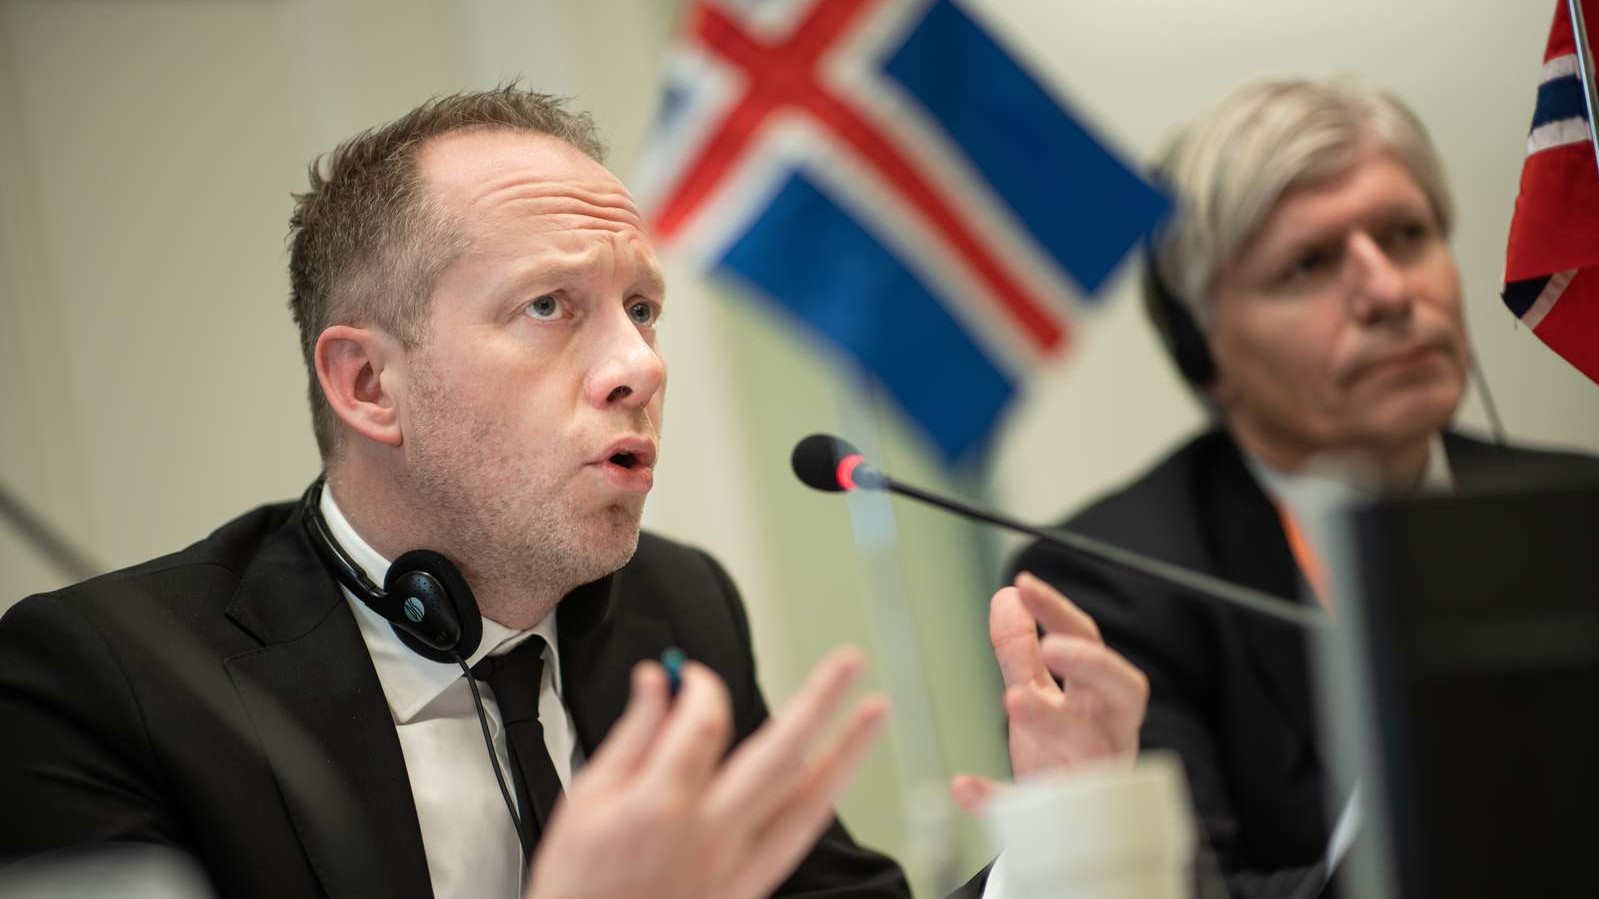 Guðmundur Ingi Guðbrandsson: Planned to be a sheep farmer, now Iceland's labour minister